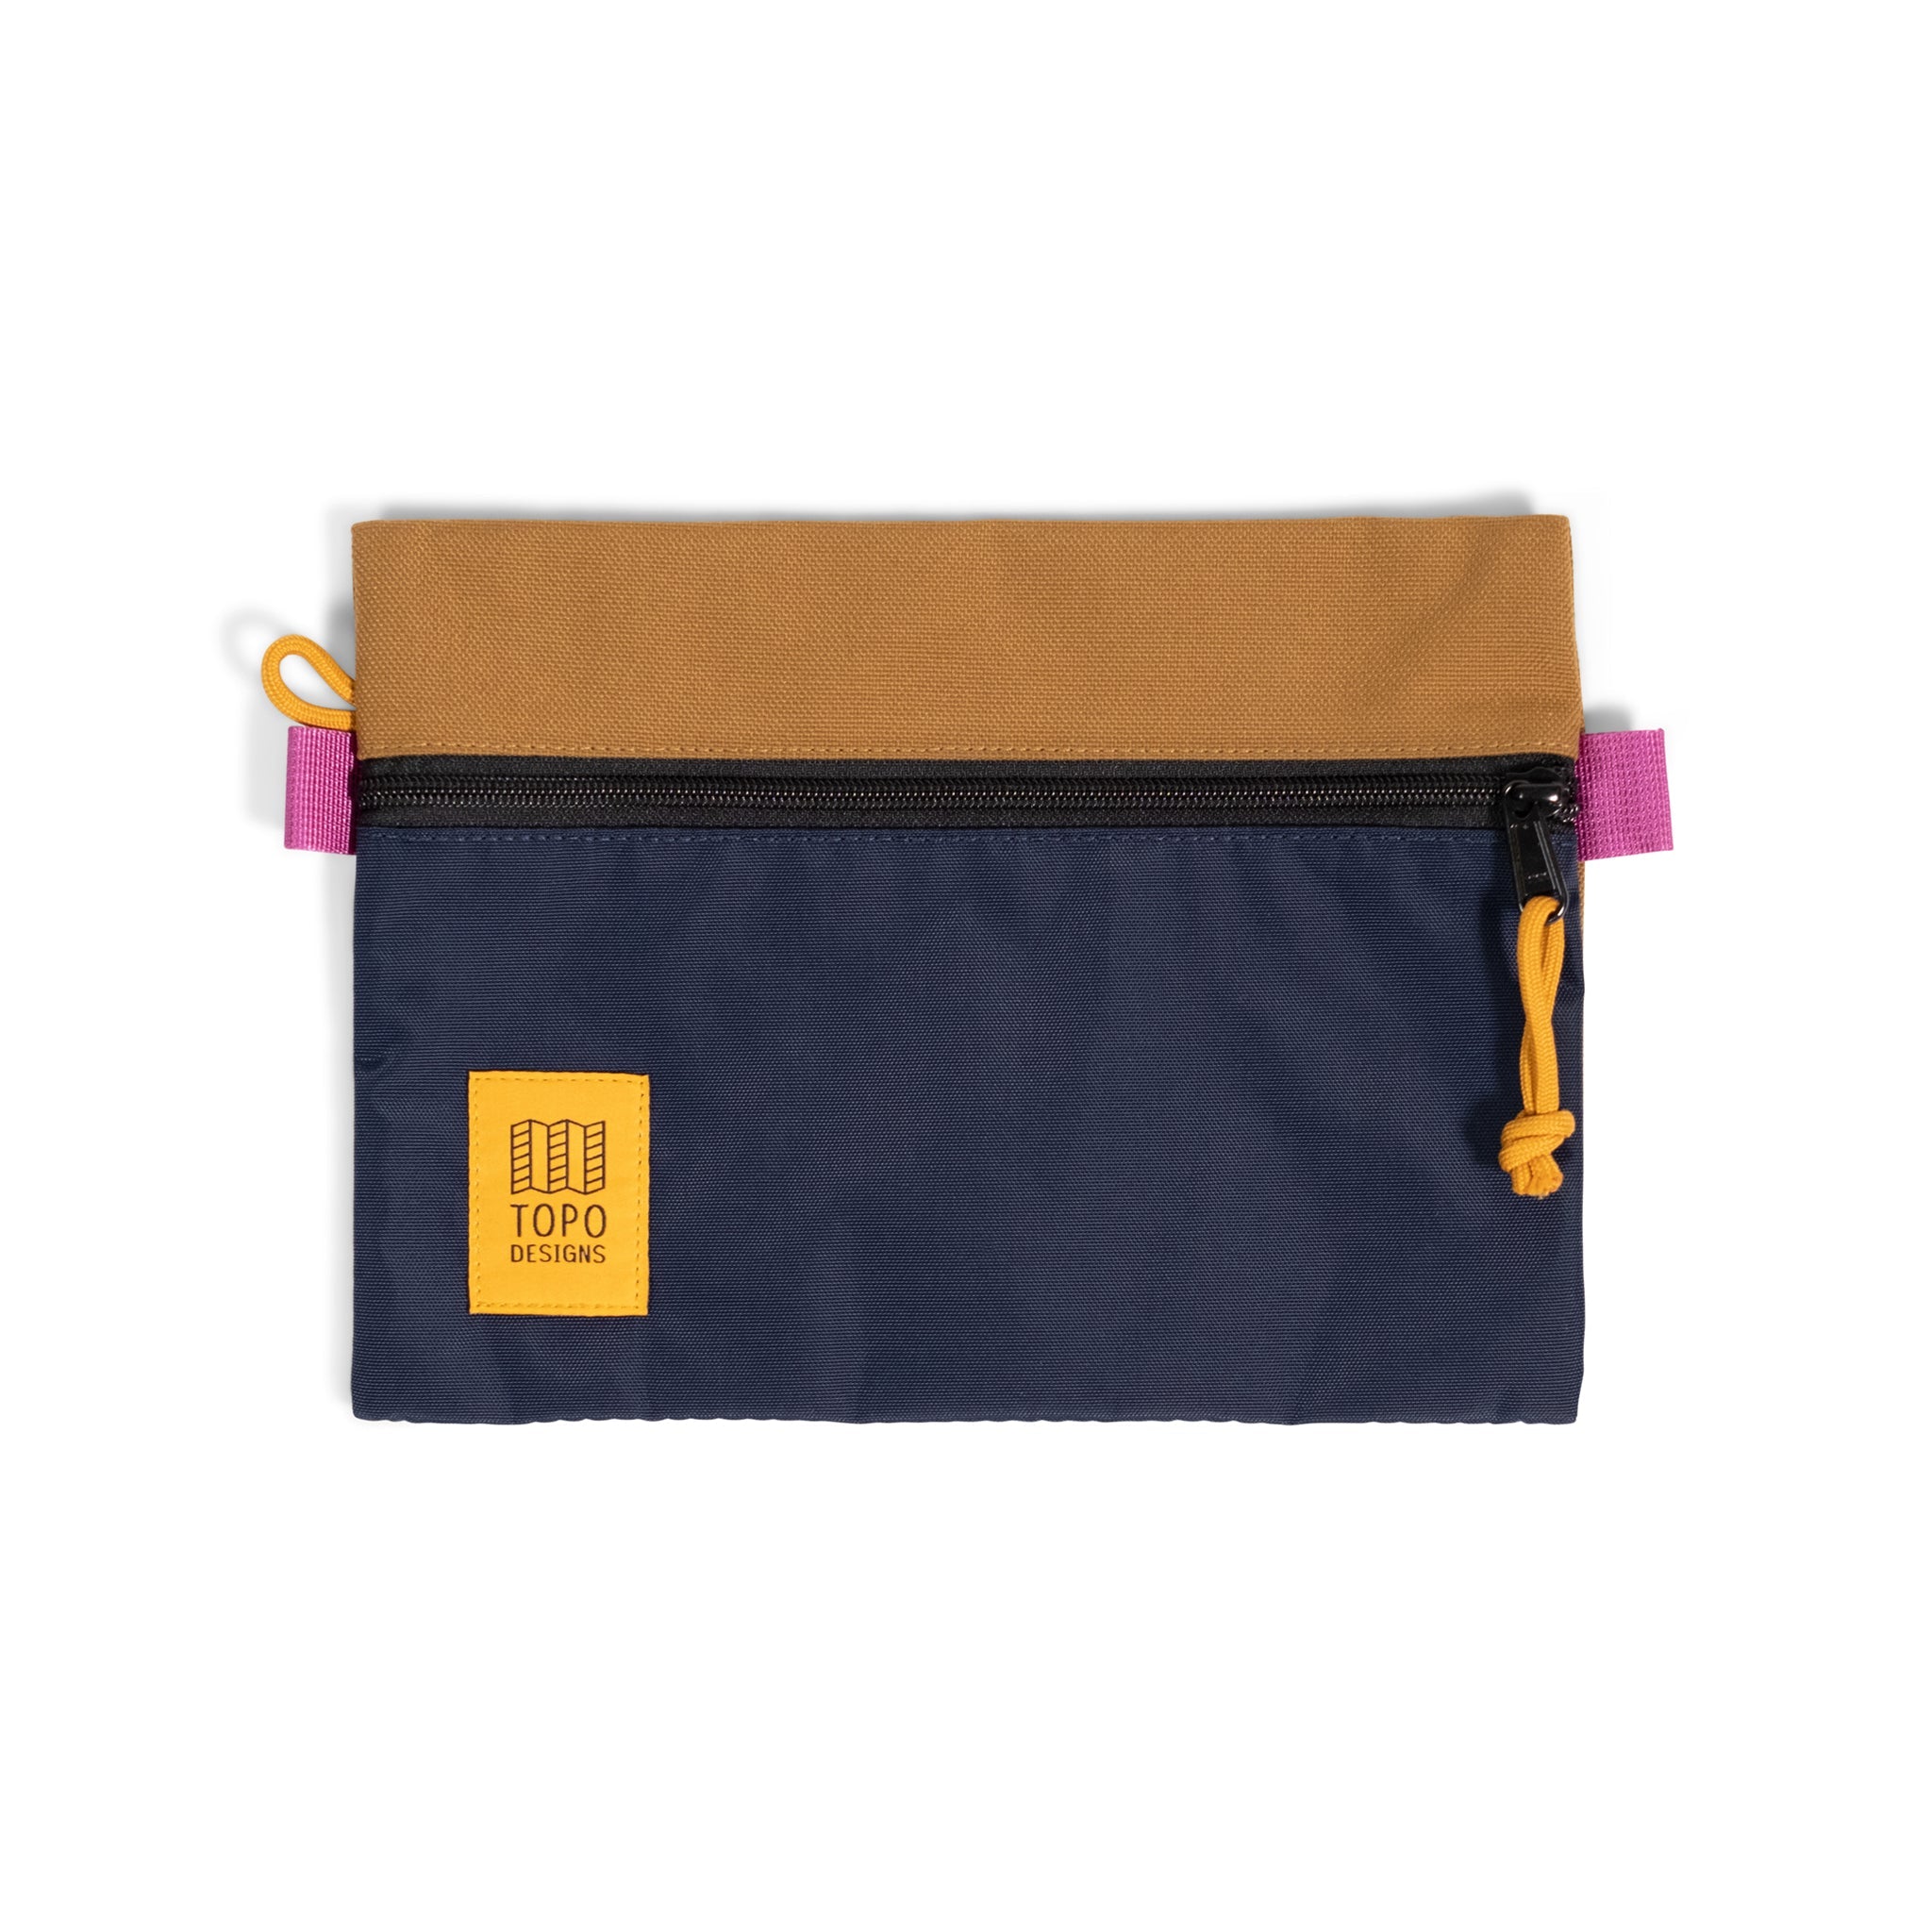 Topo Designs Accessory Bag "Micro" in "Dark Khaki / Navy""